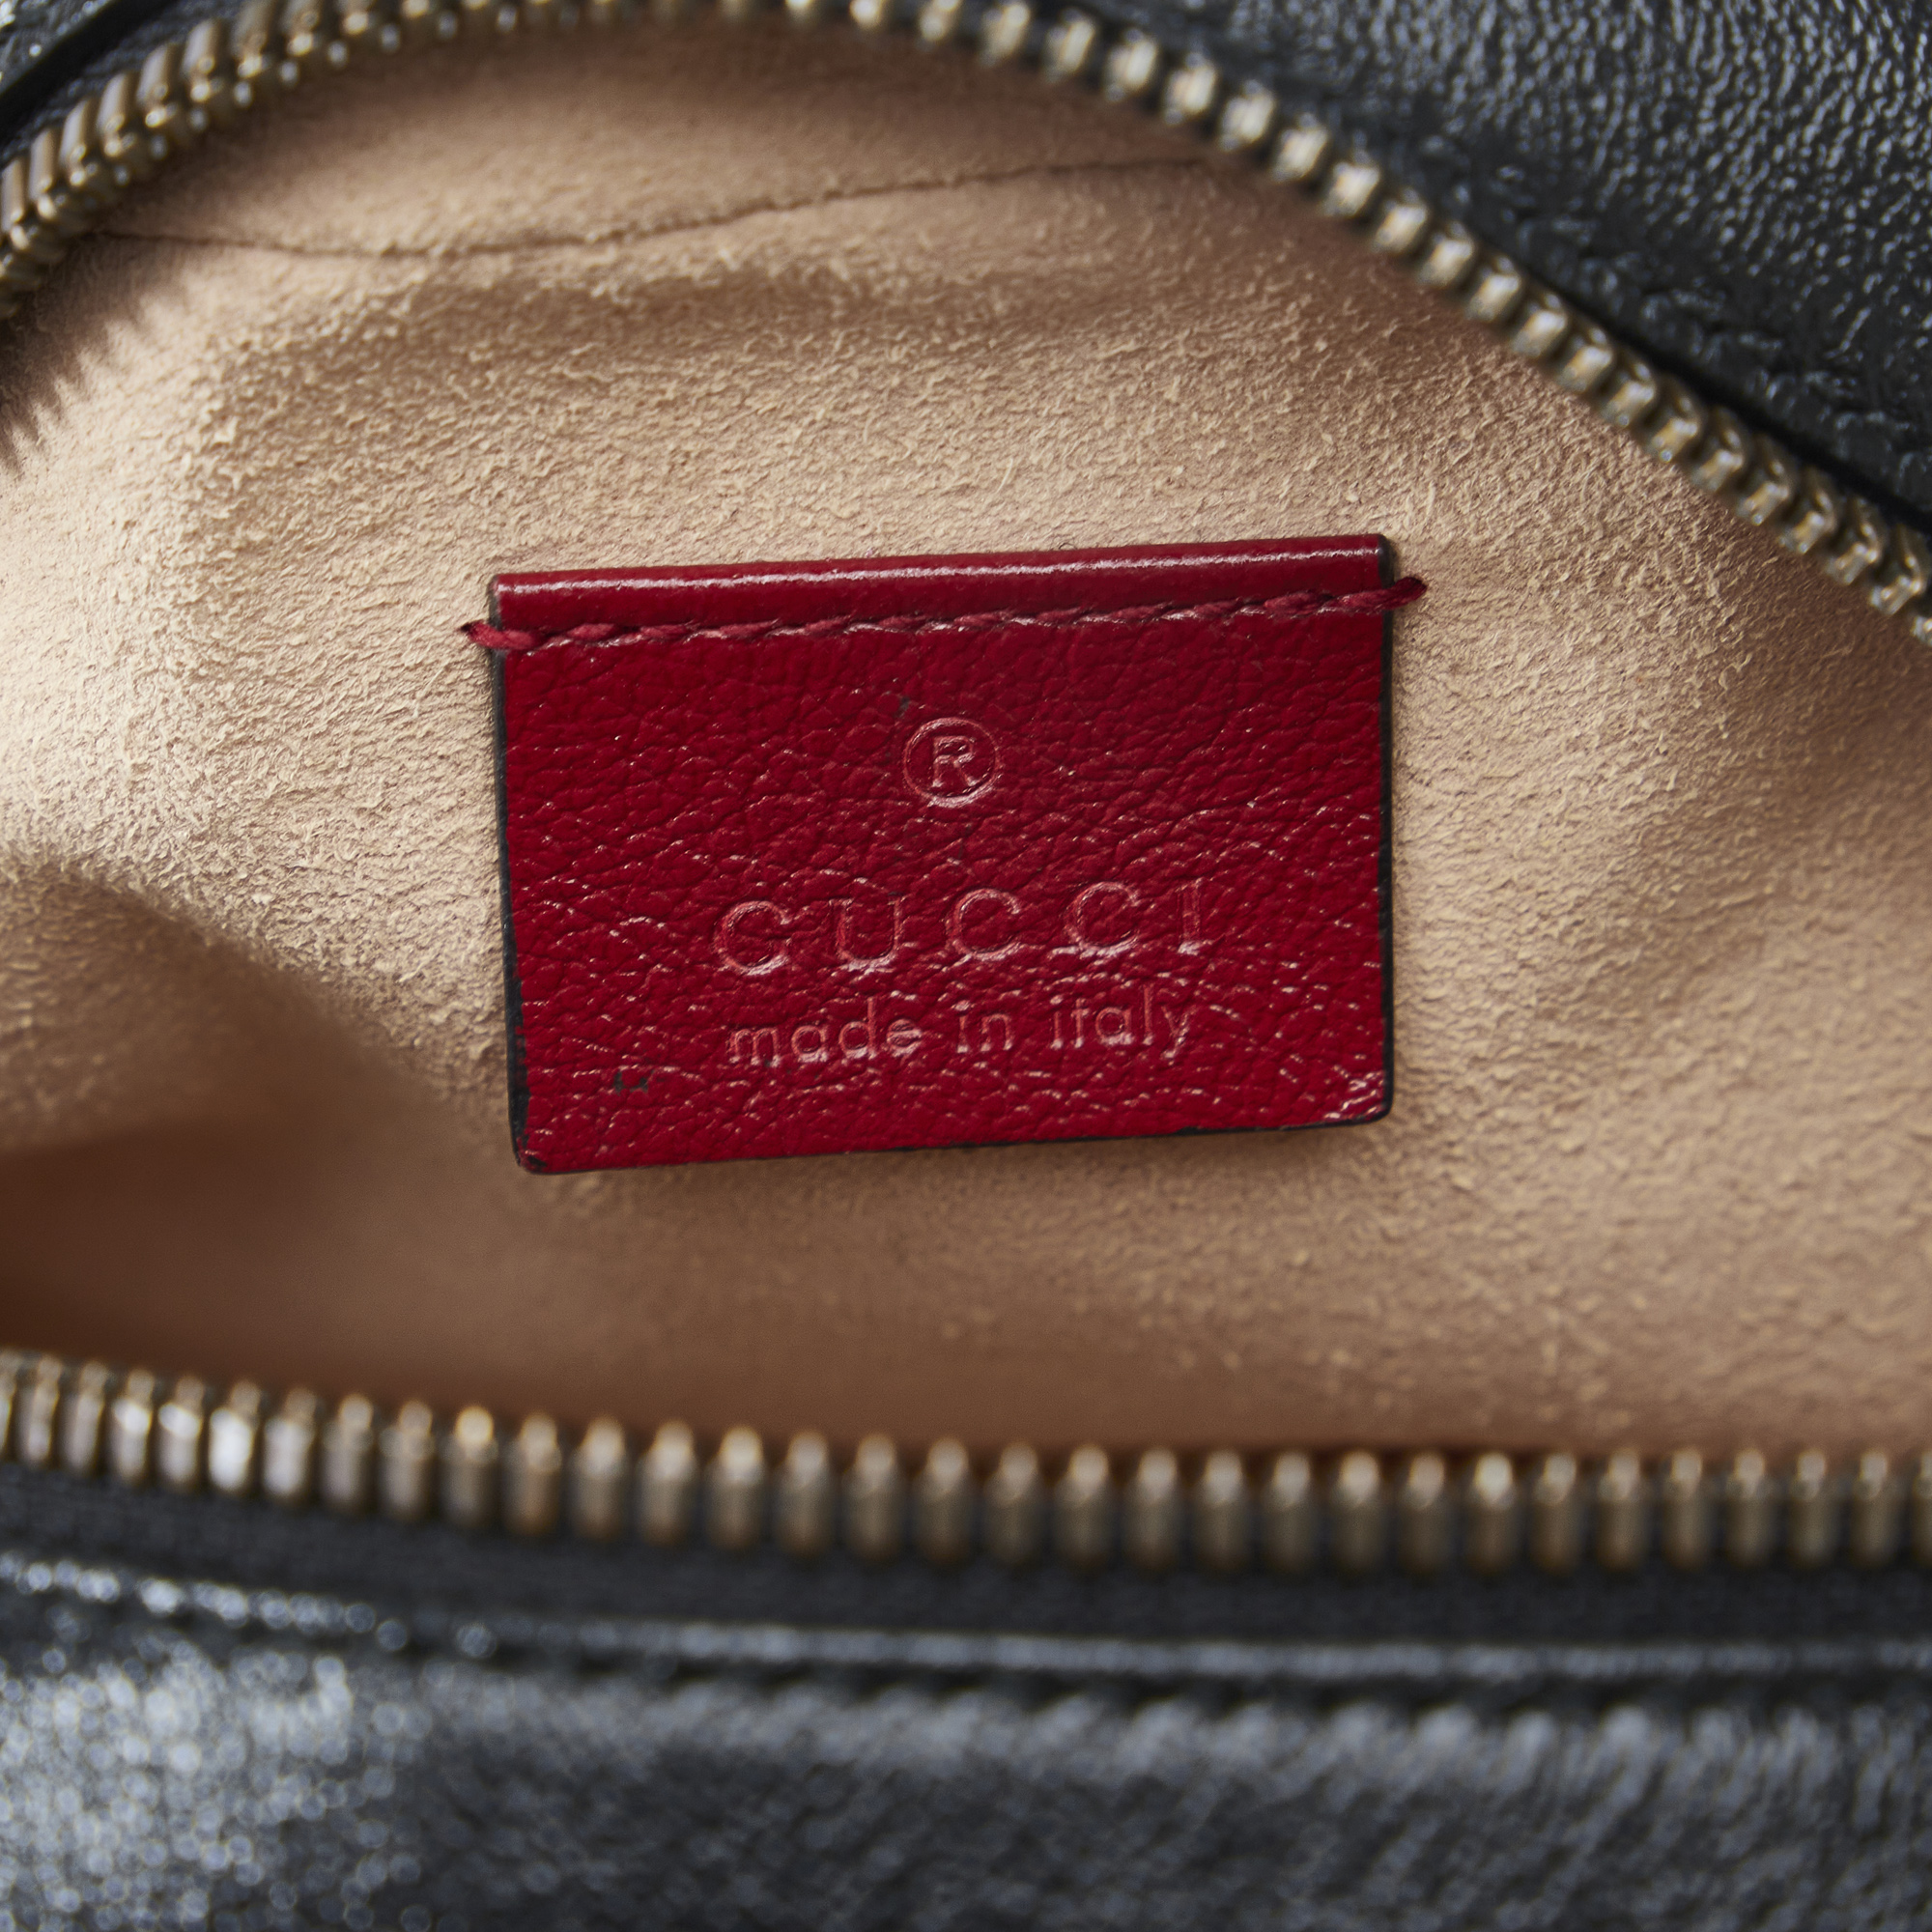 Gucci Black,Red Mini Torchon GG Marmont Round Crossbody Bag